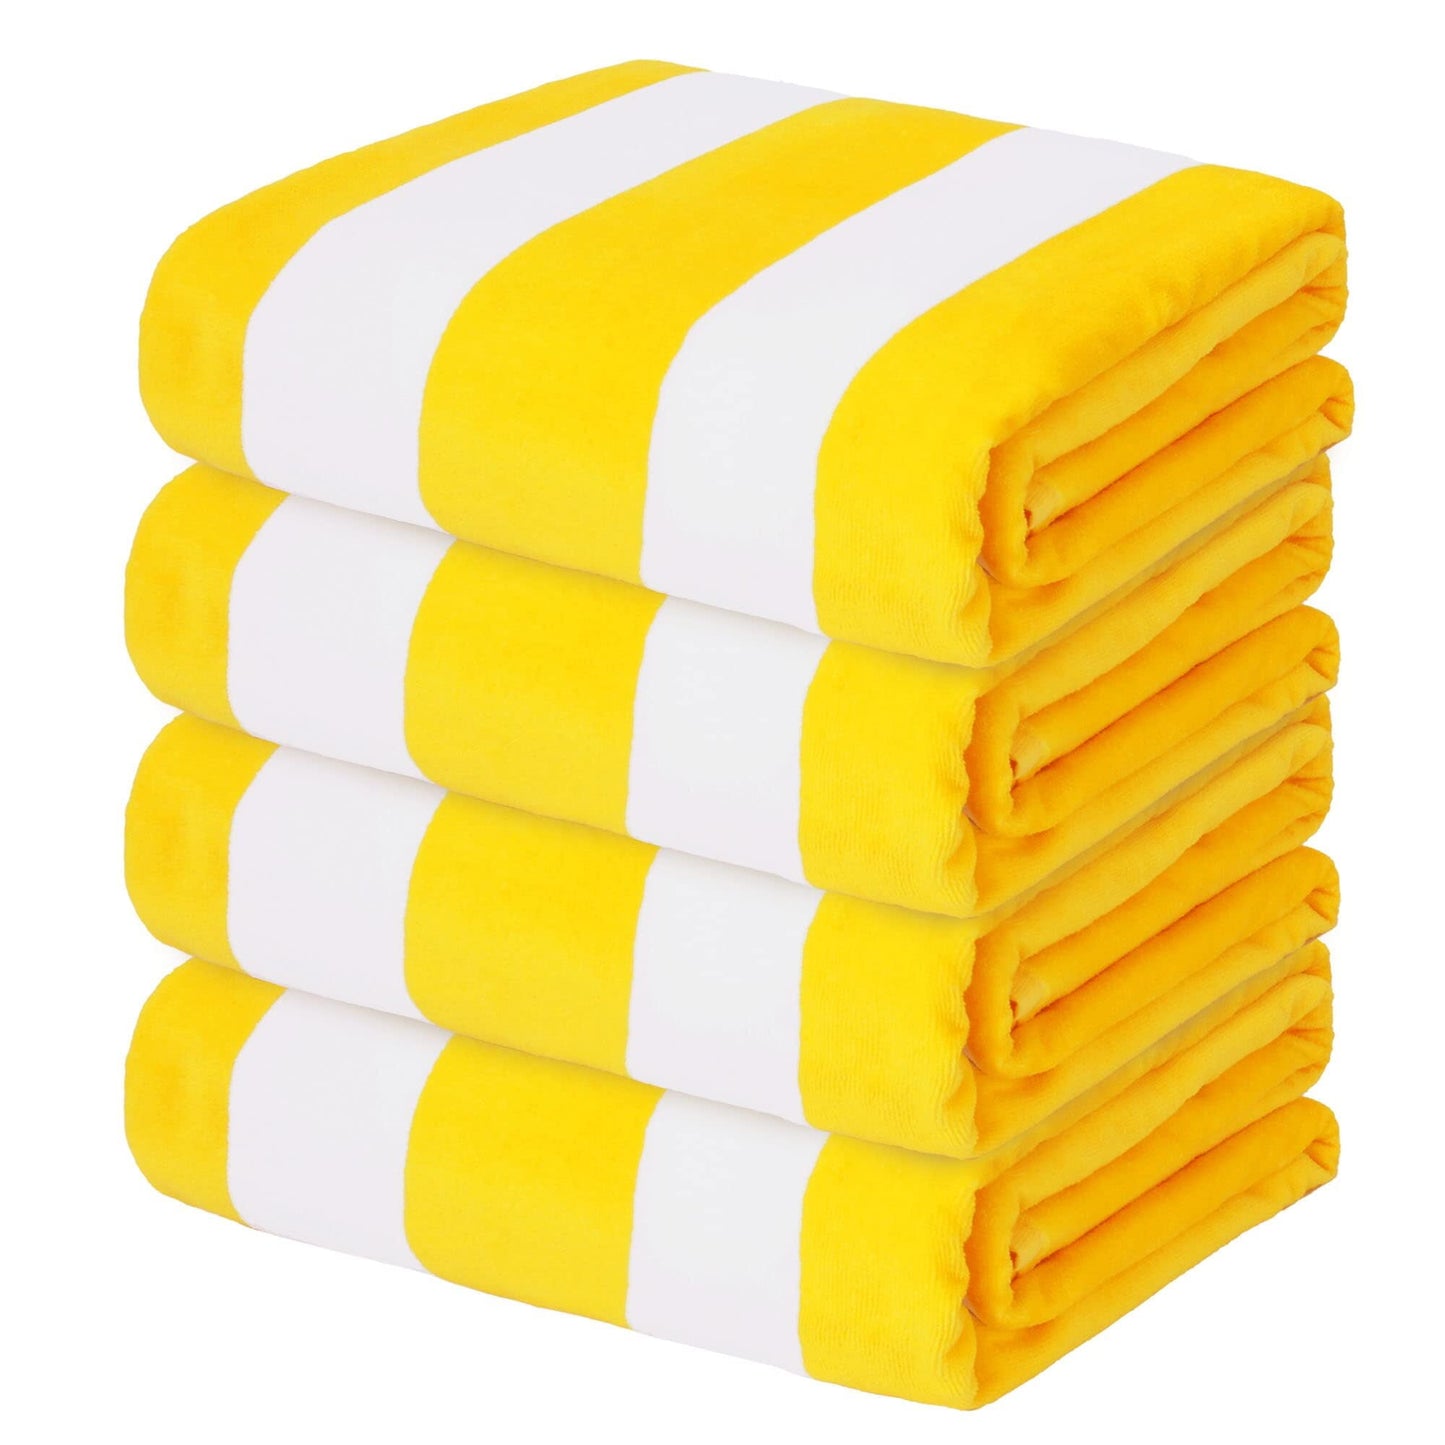 Exclusivo Mezcla 4-Pack Cotton Large Cabana Stripe Beach Towels, Super Absorbent Soft Plush Pool Towel, Bath Towel (Yellow, 30"x60")